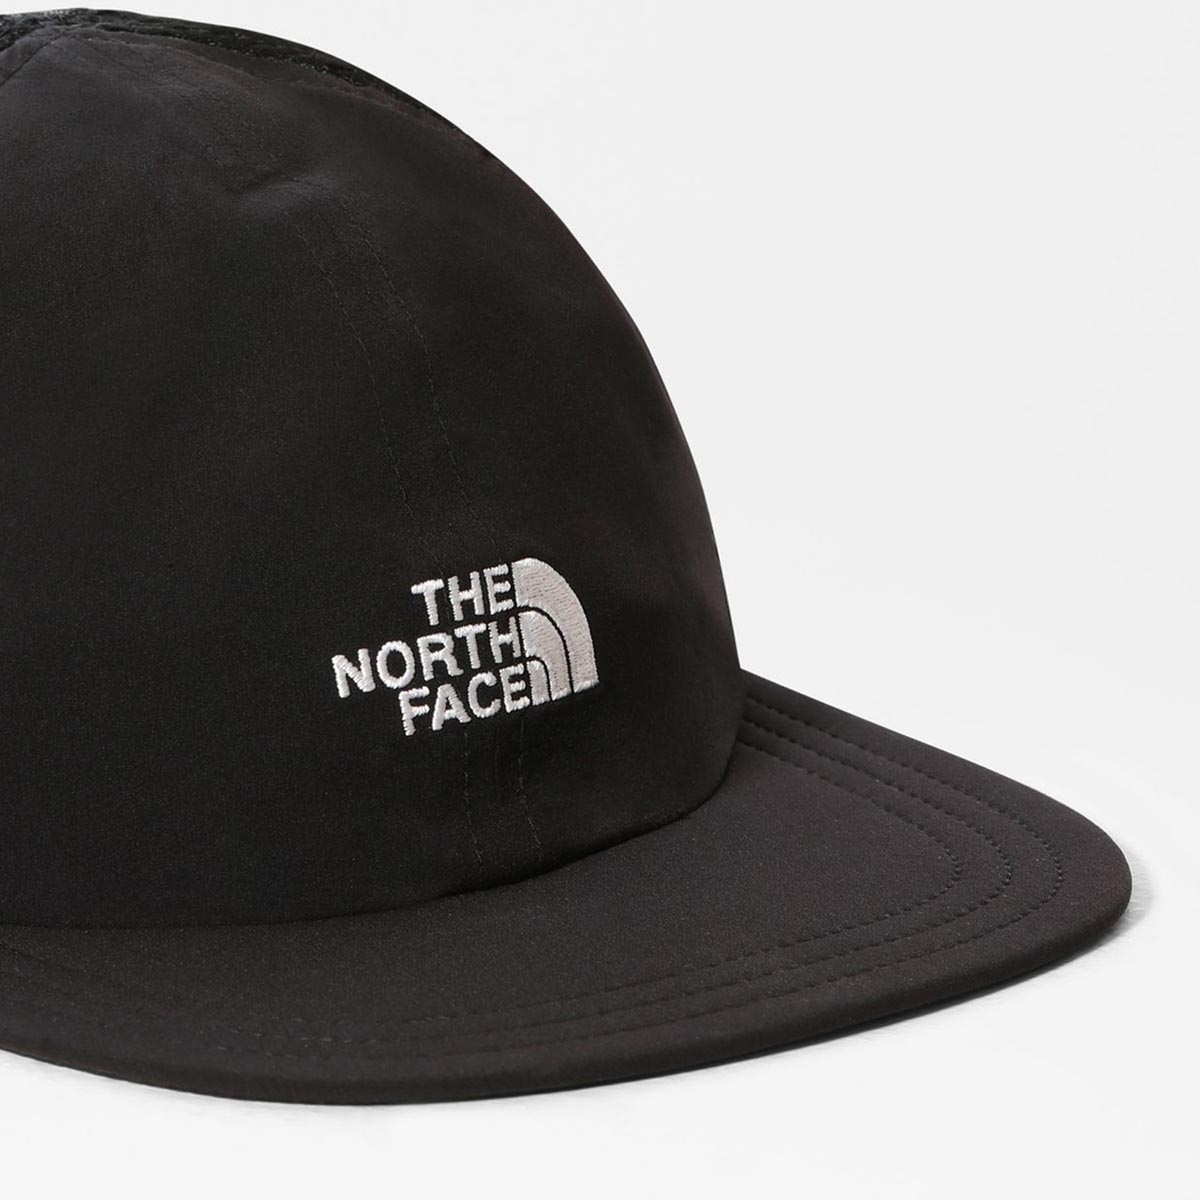 THE NORTH FACE - RUNNER MESH CAP